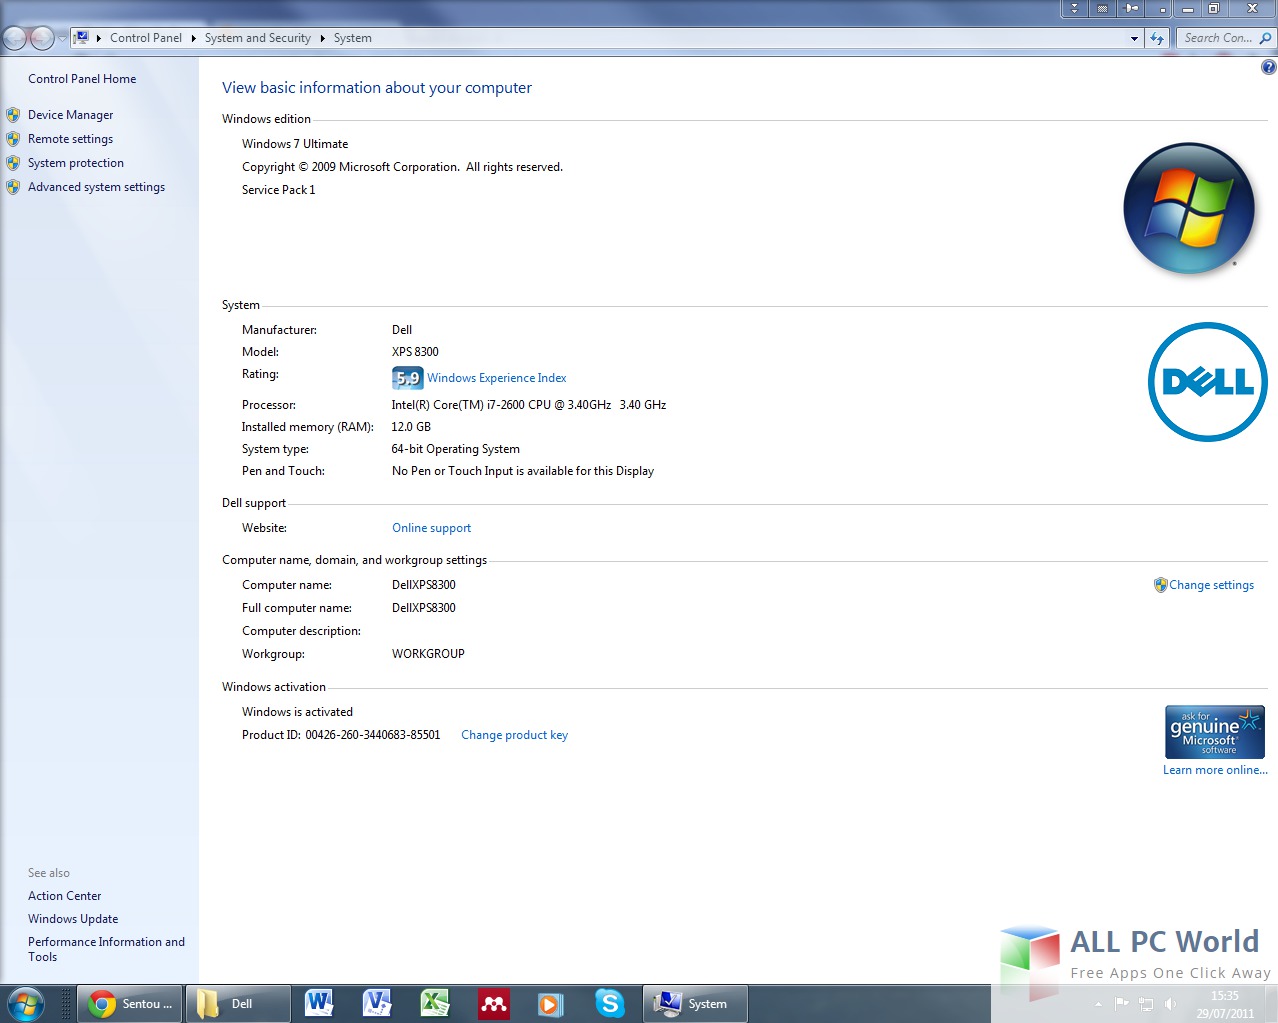 Dell Genuine Windows 7 Ultimate OEM Free Download